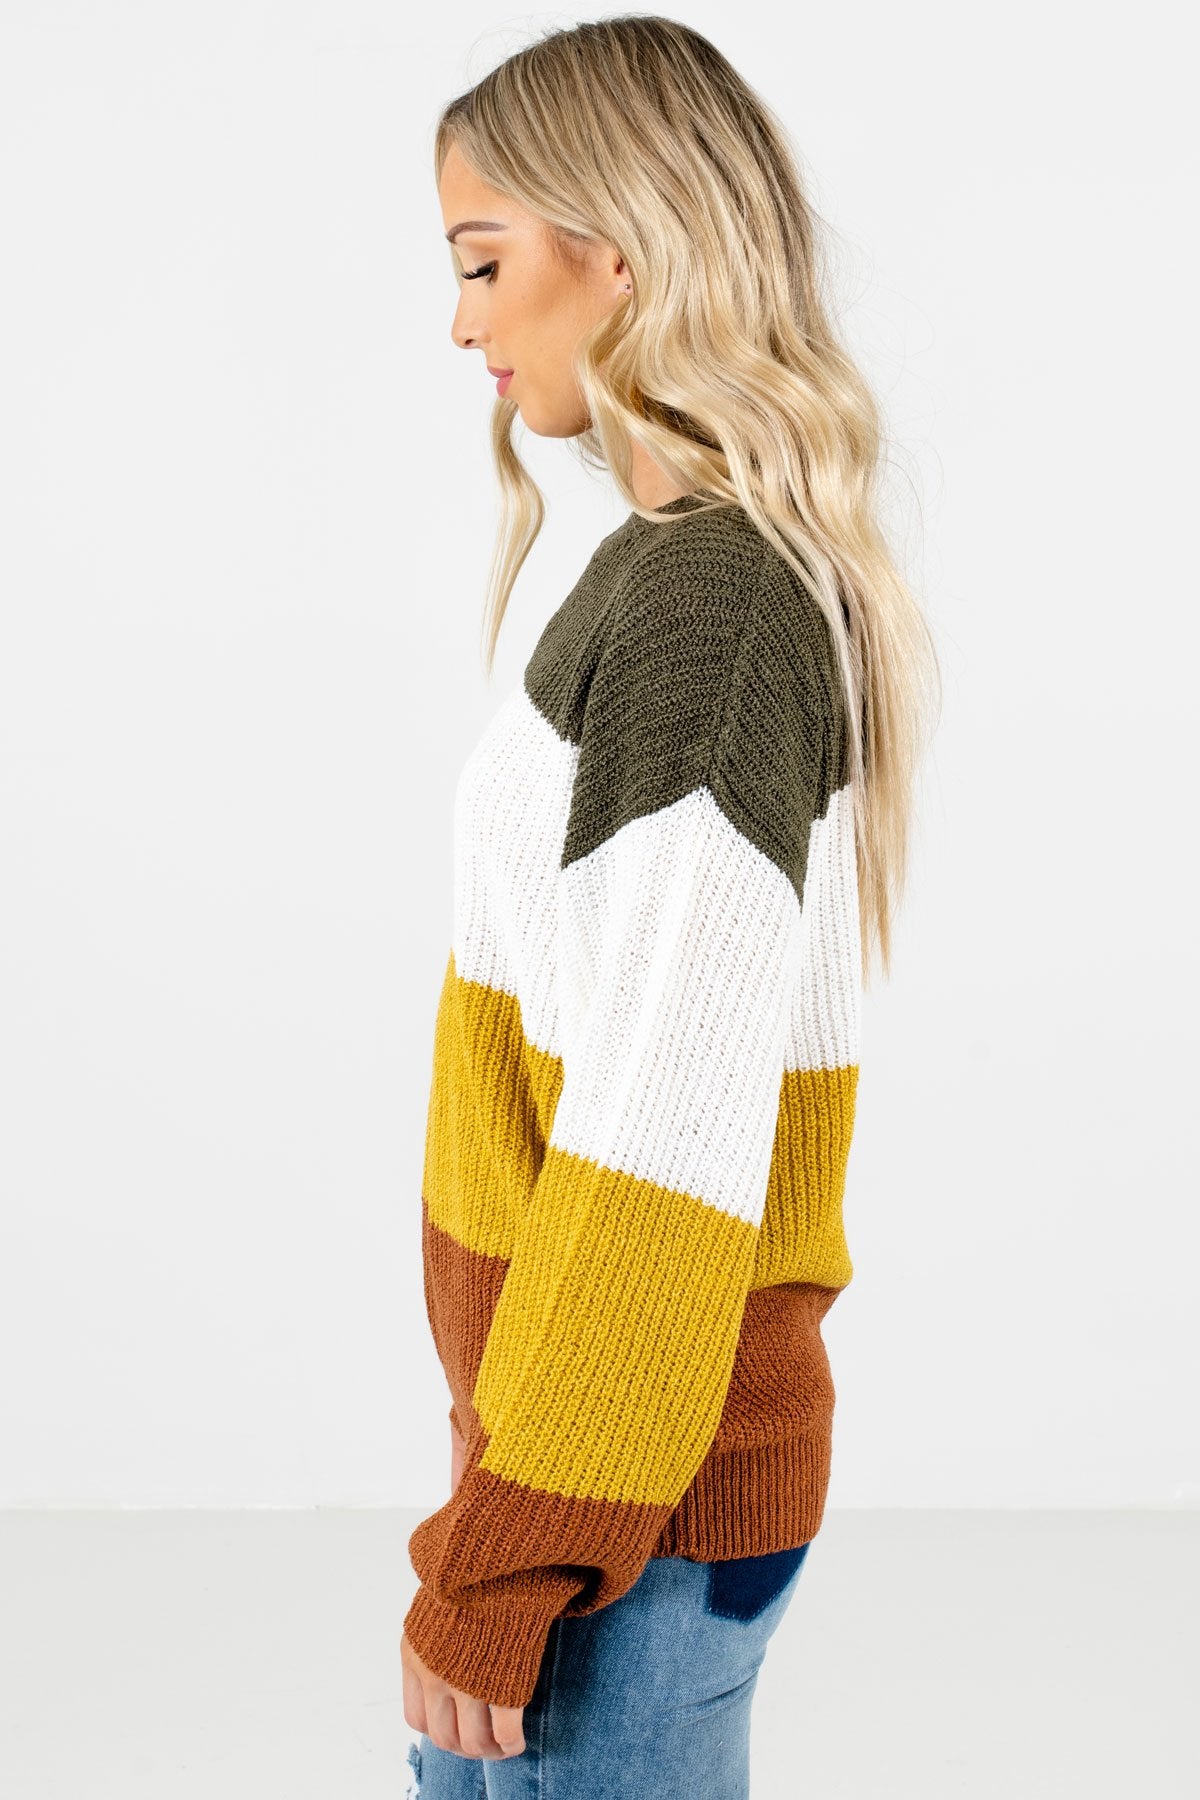 Mustard Yellow Round Neckline Boutique Sweaters for Women